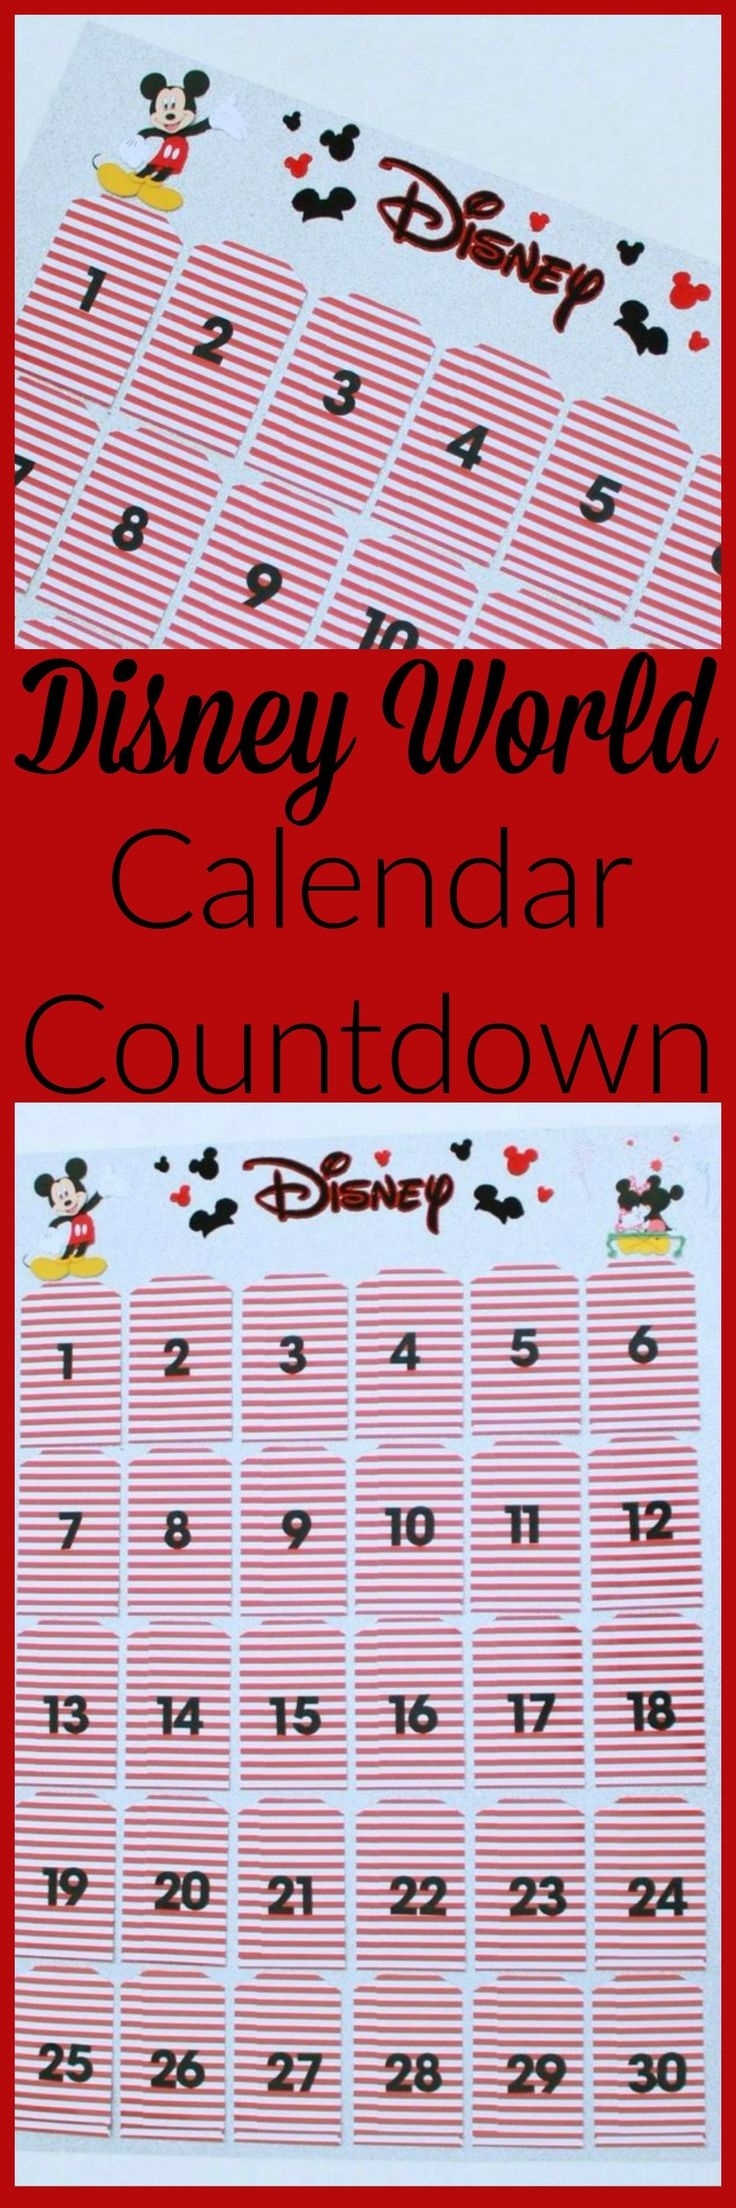 Disney World Calendar Countdown | #disneysmmoms : Everything Disney Vacation Club Countdown Calendar